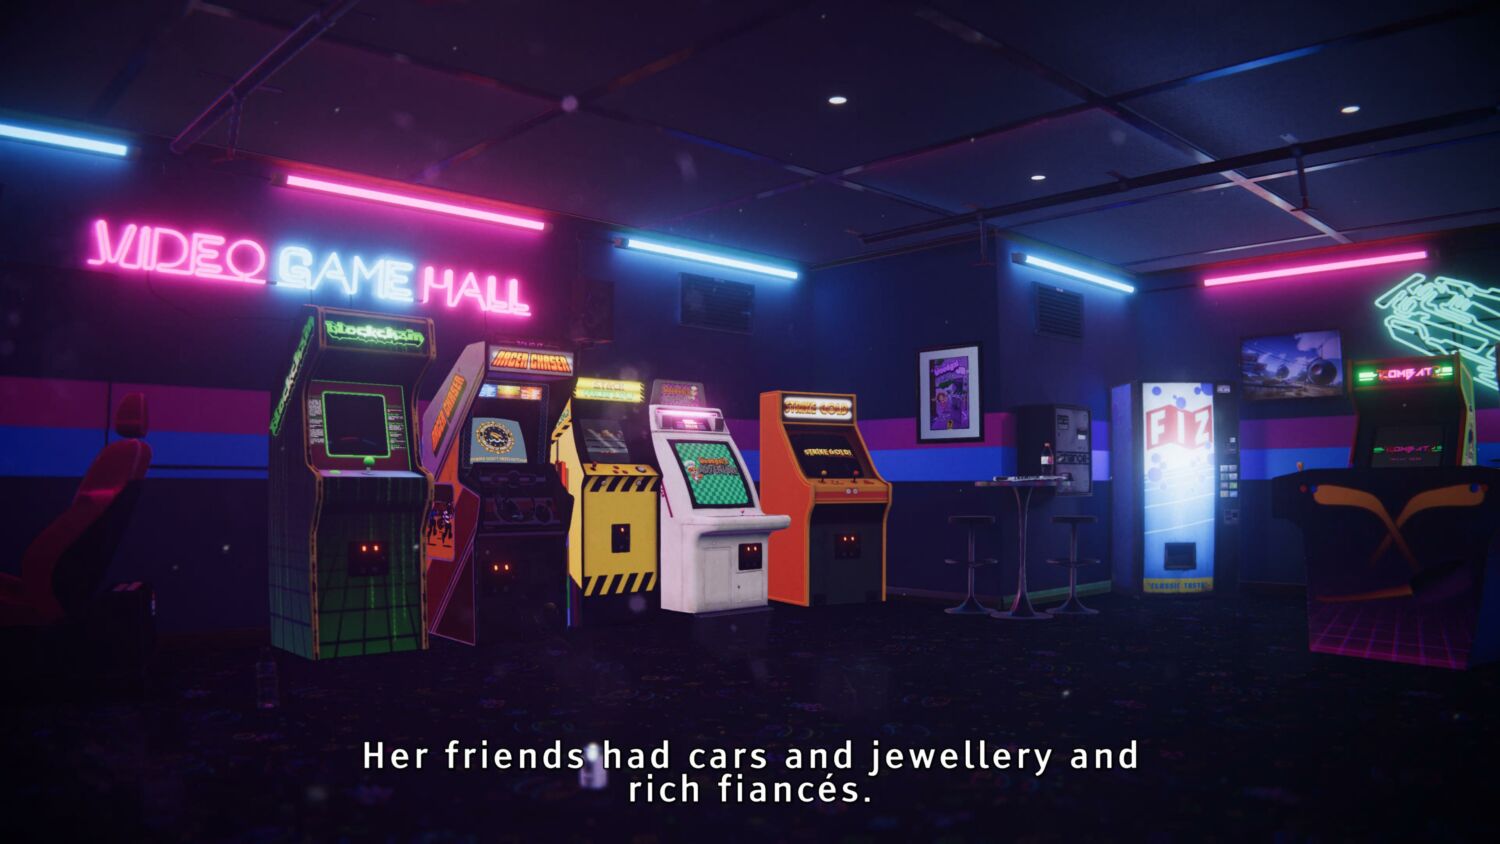 Arcade Paradise 